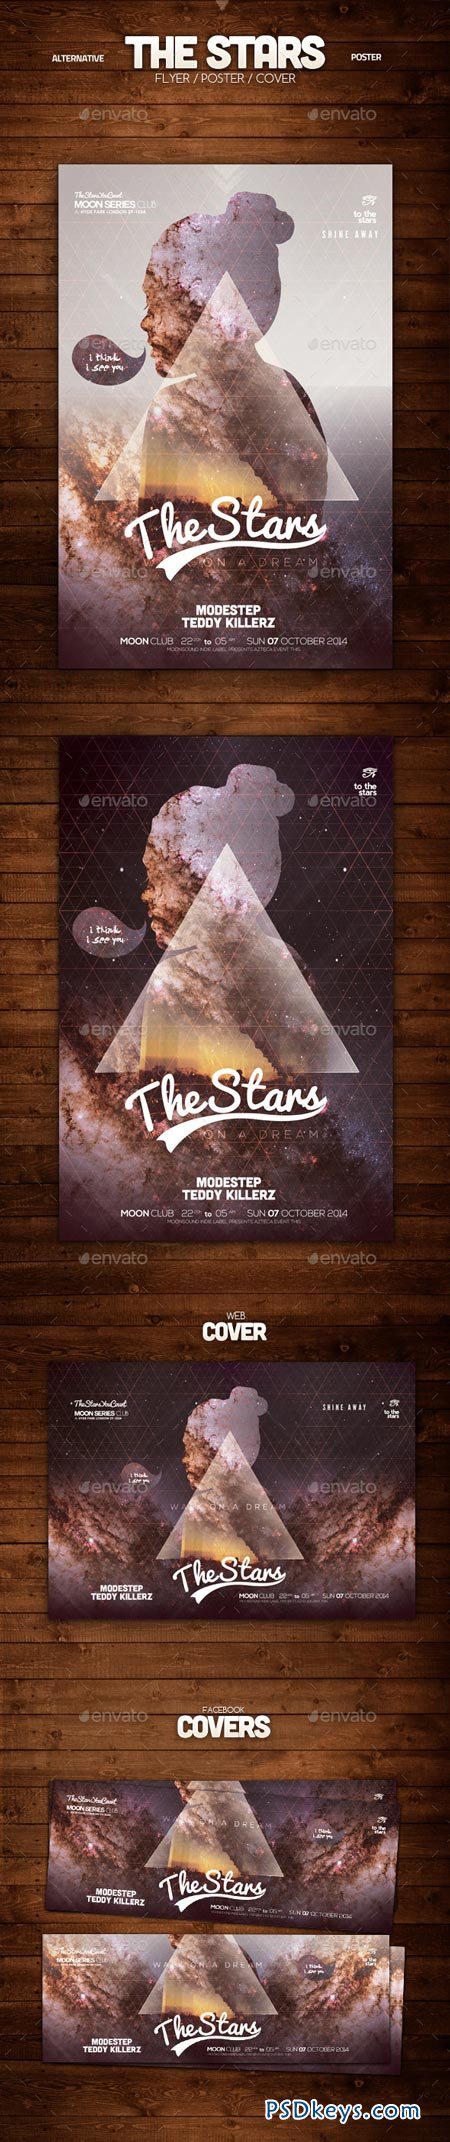 The Stars Alternative Poster 9199078